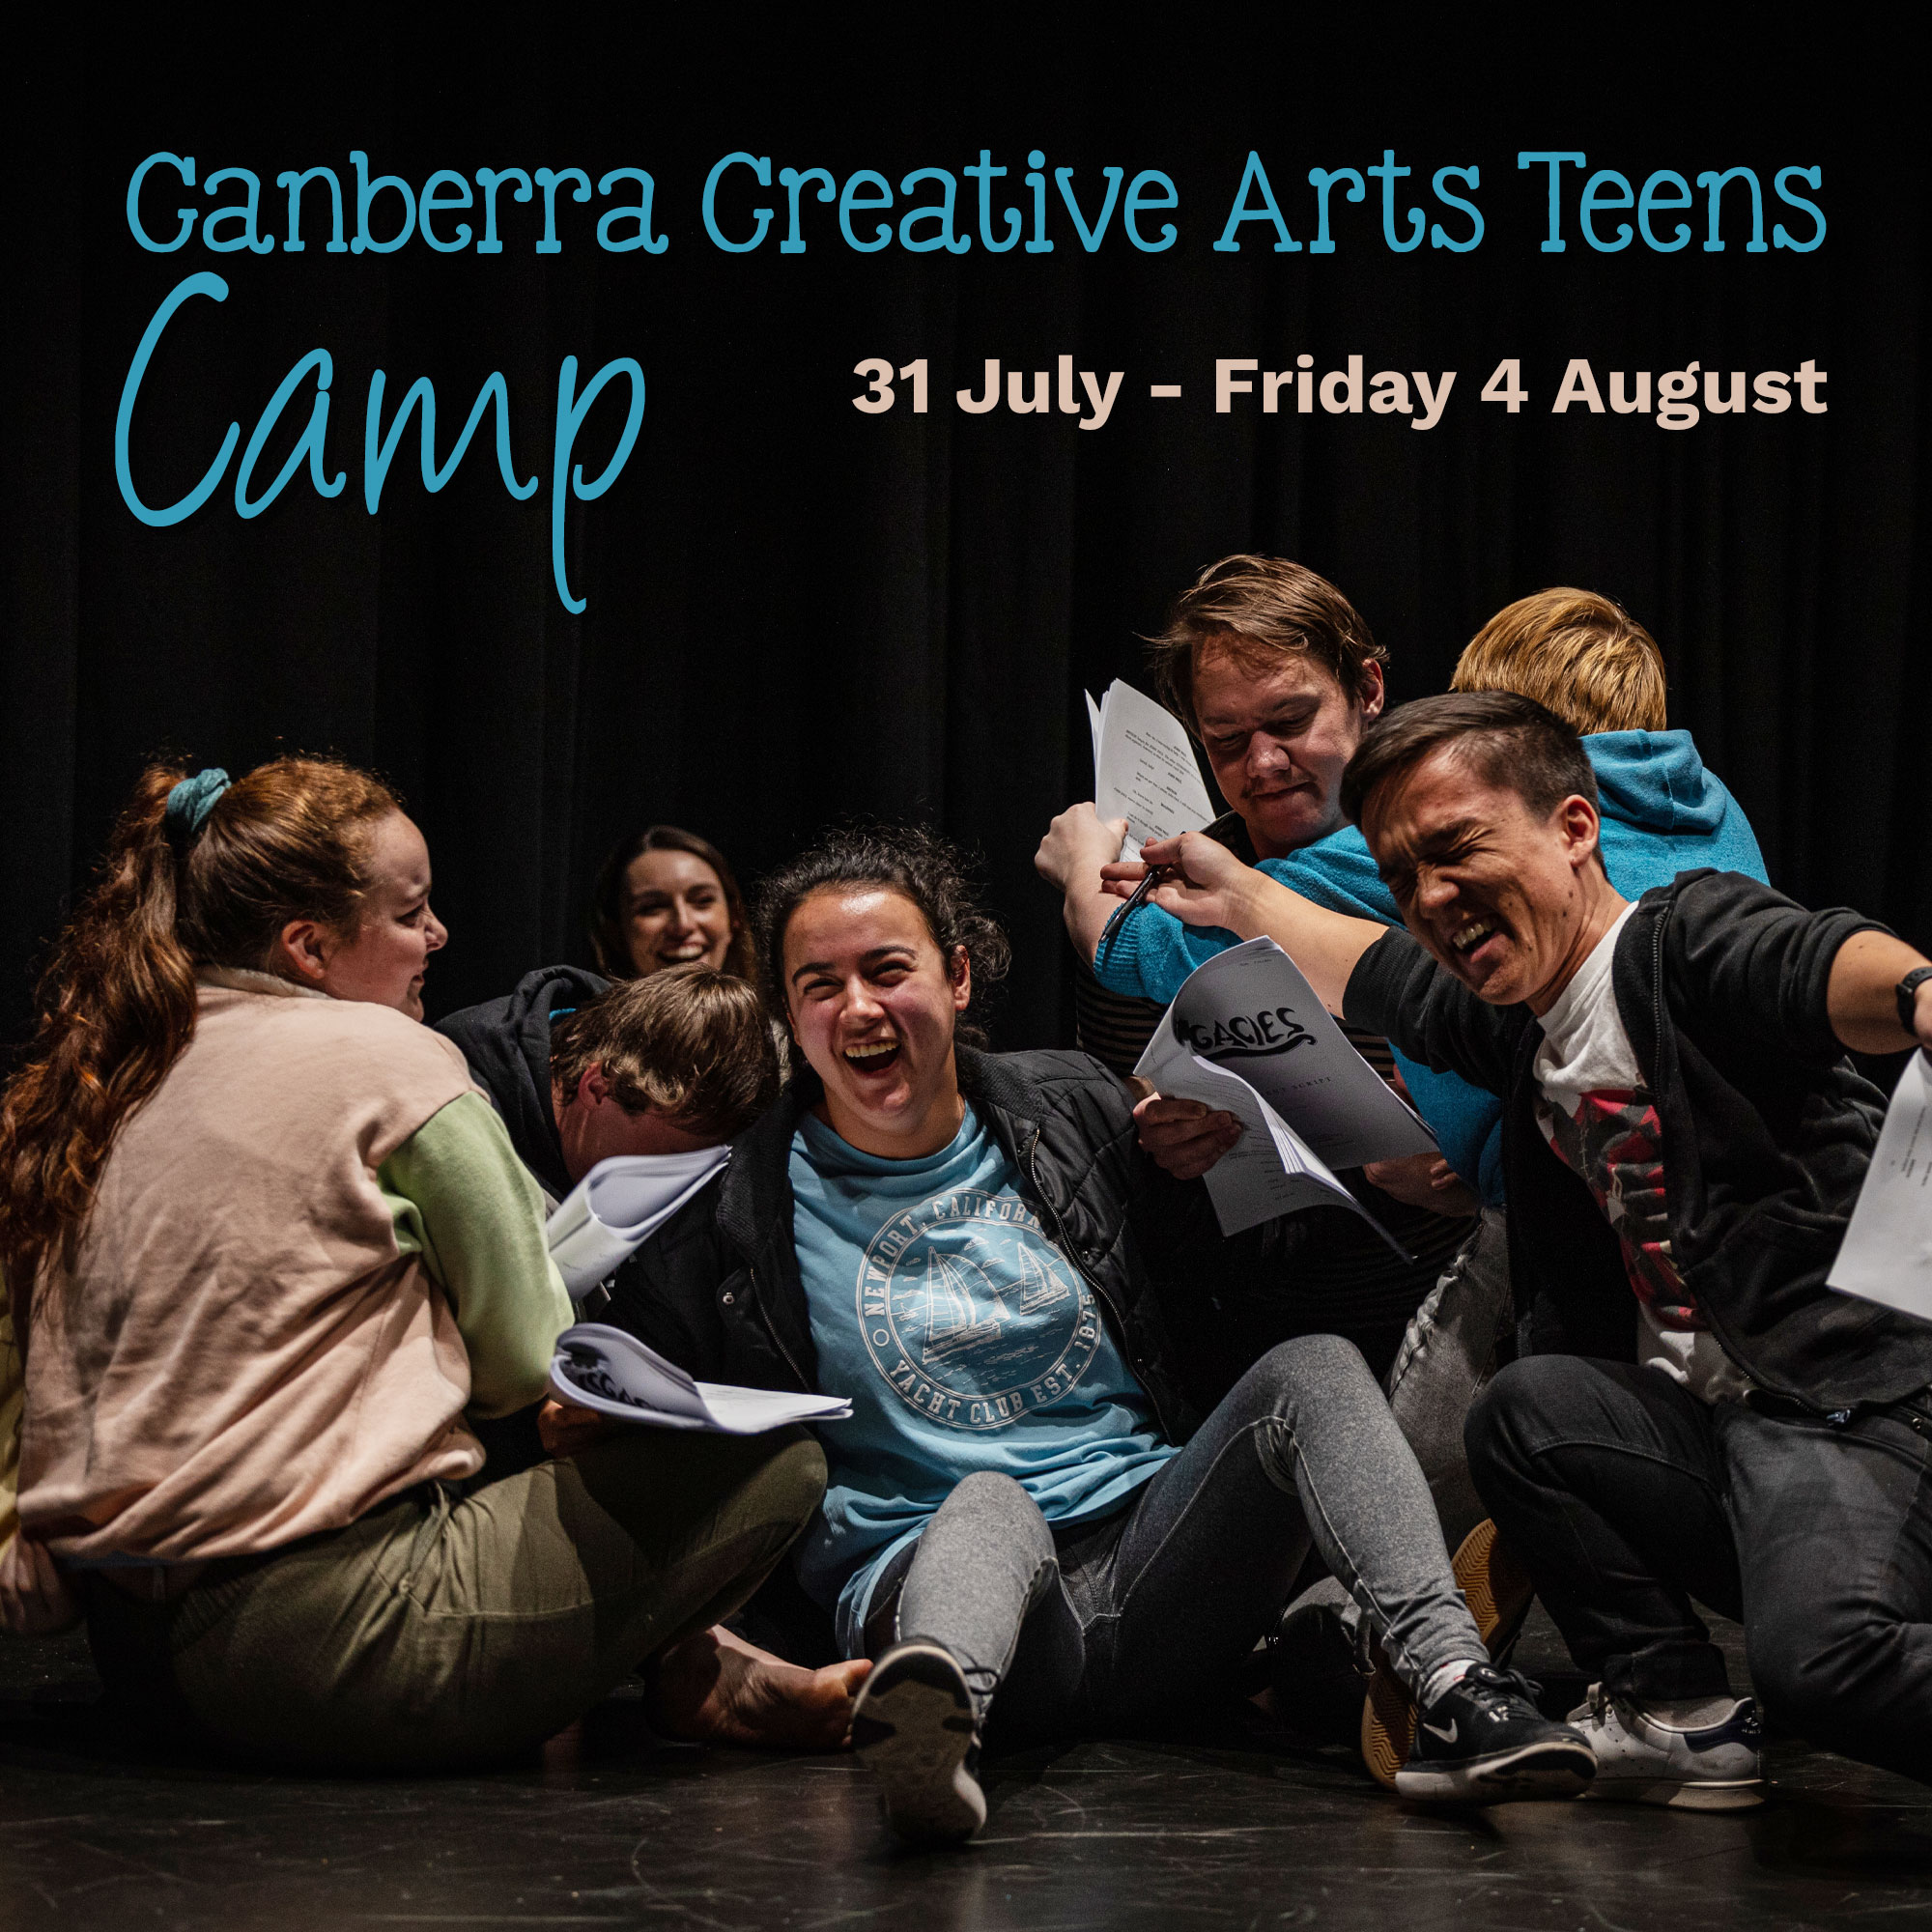 Canberra Creative Arts Teens Camp